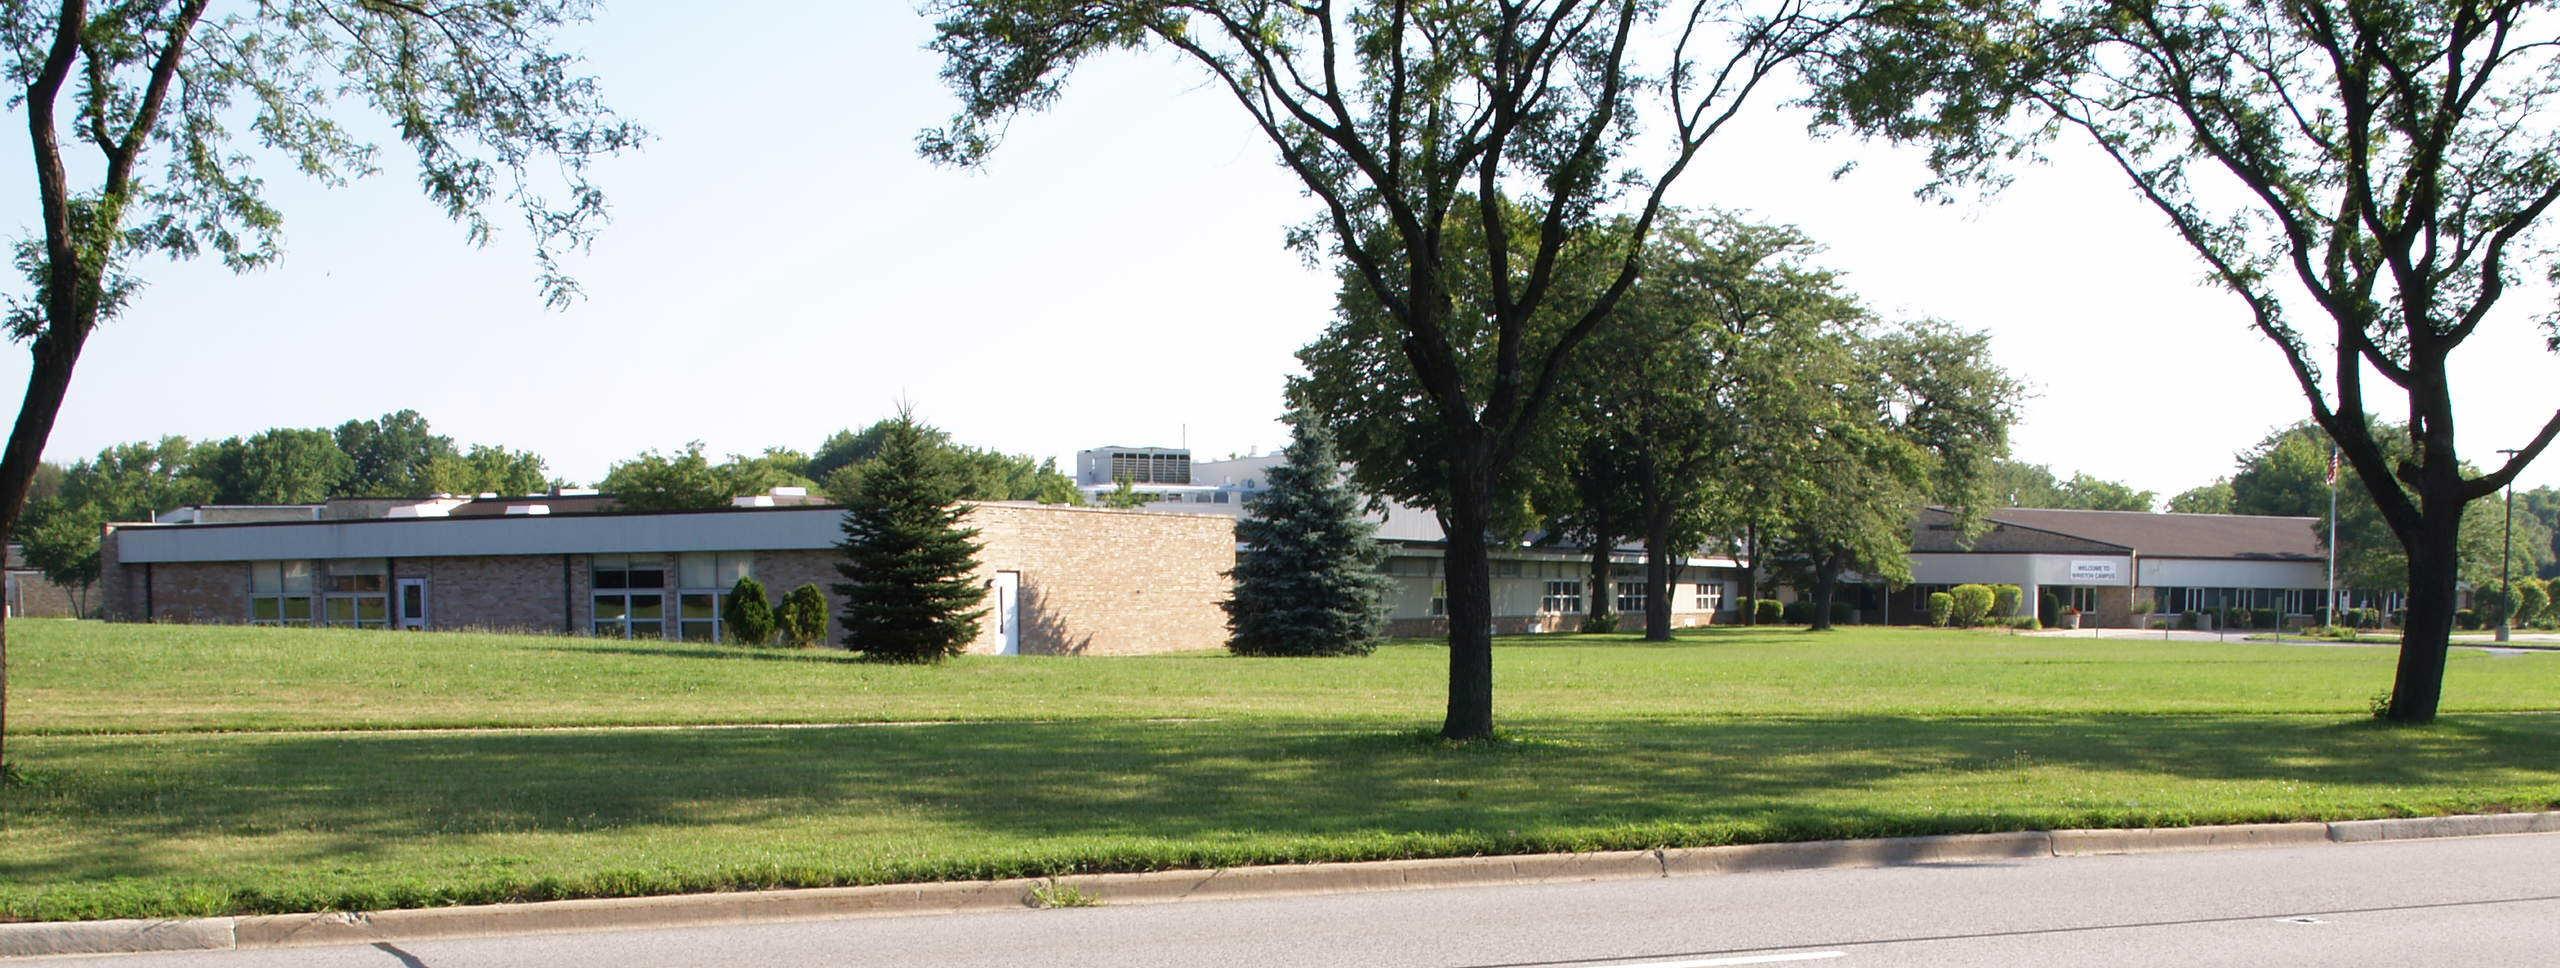 Winston Campus Junior High Palatine, Illinois